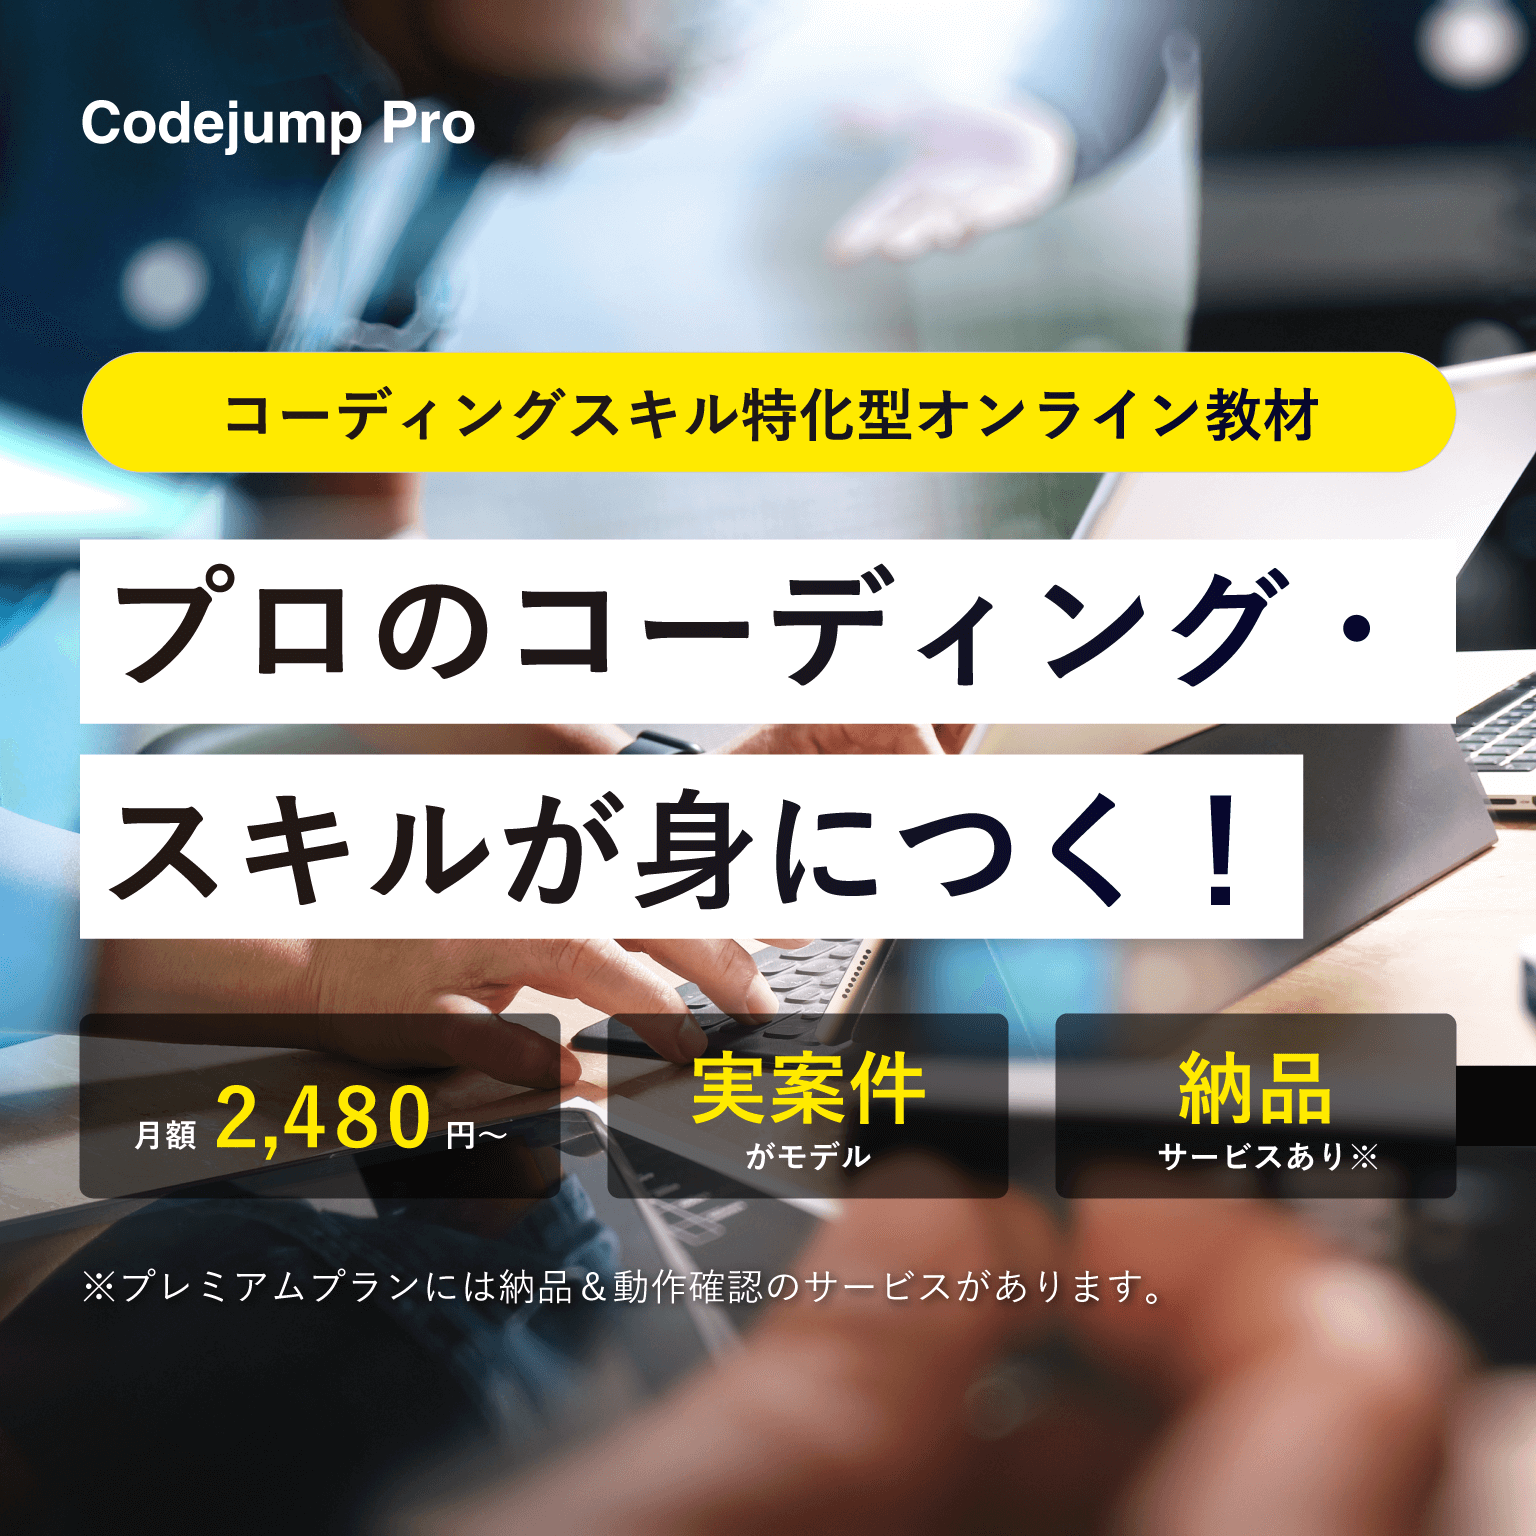 Codejump Pro